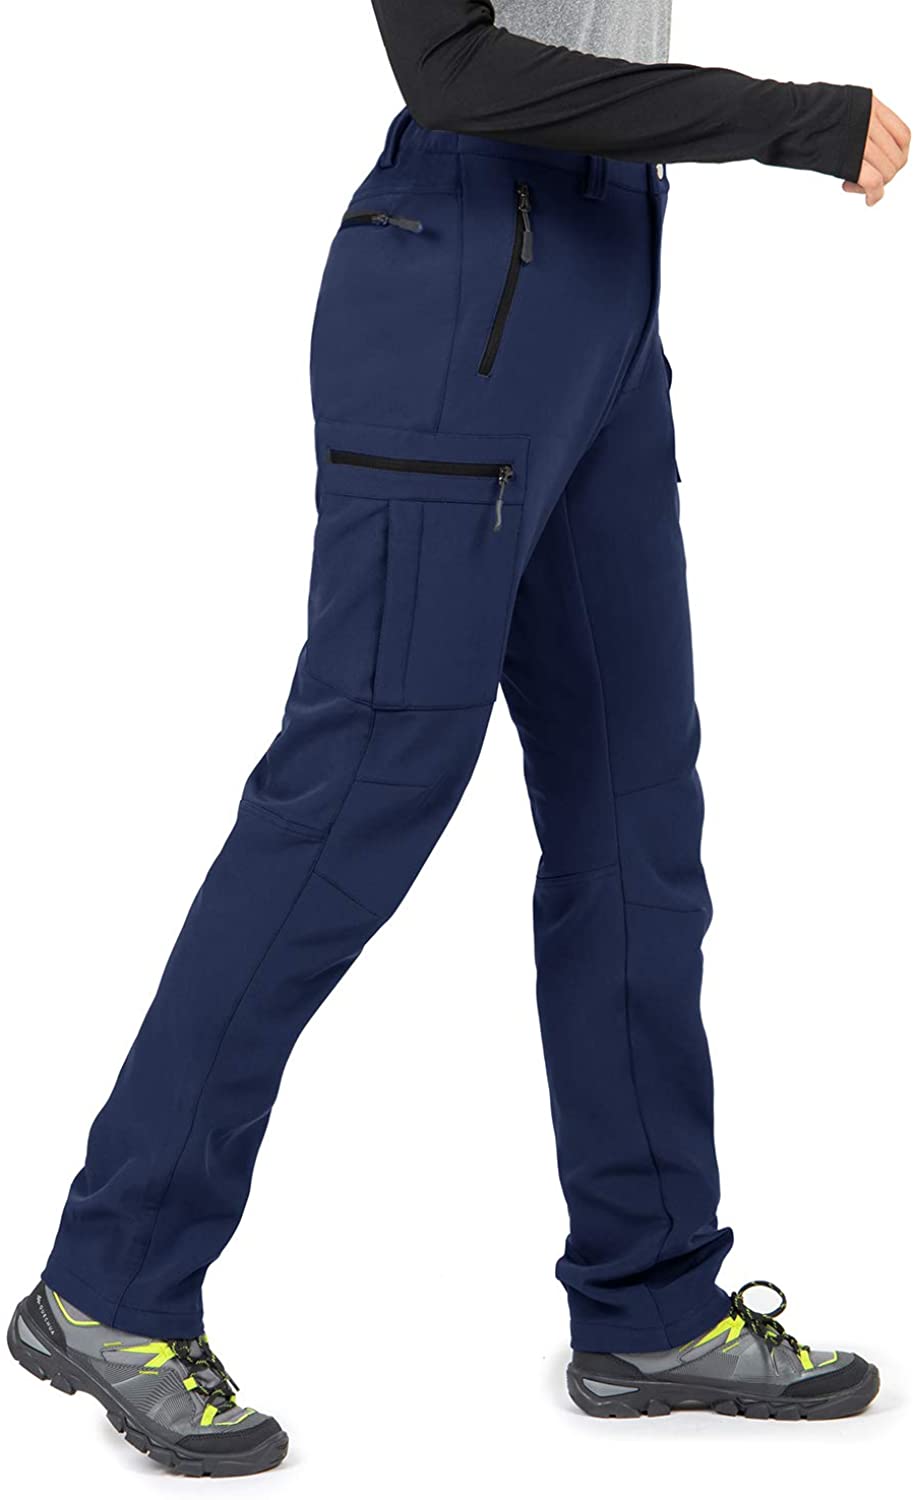 LANBAOSI Women Softshell Fleece Lined Snow Ski Hiking Pants Size L 